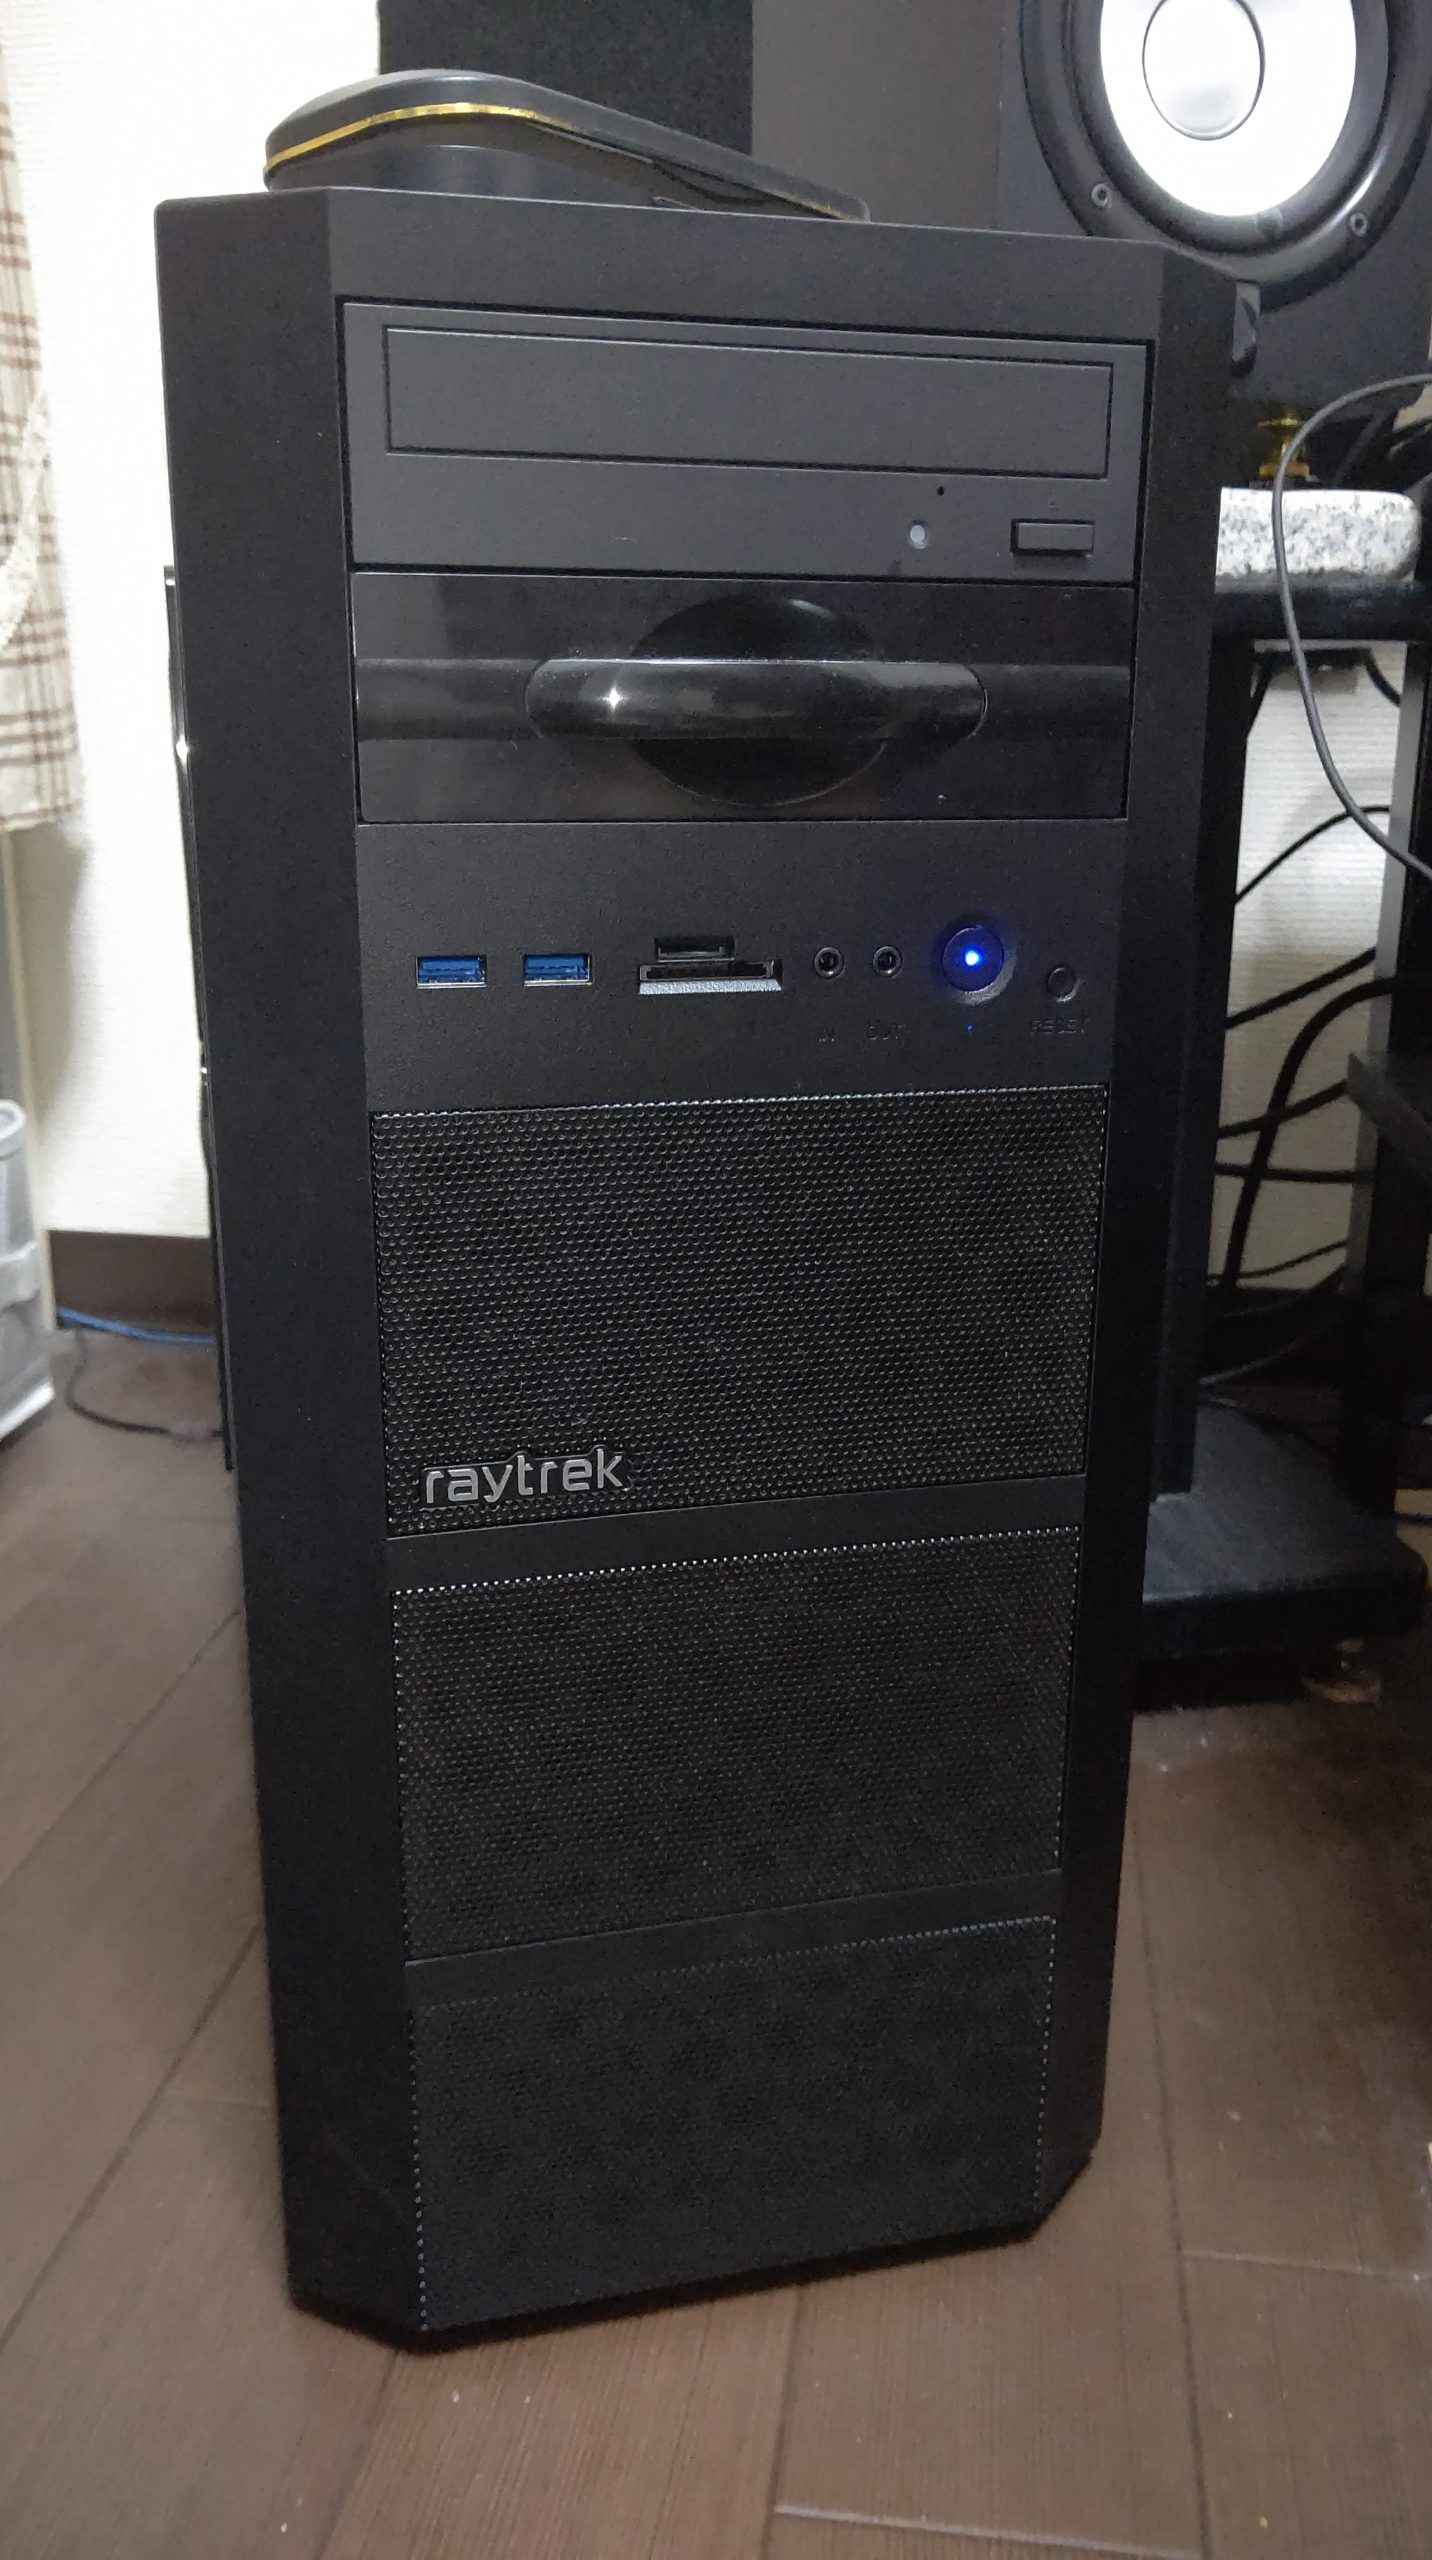 raytrek XF ASUS H570 - デスクトップ型PC